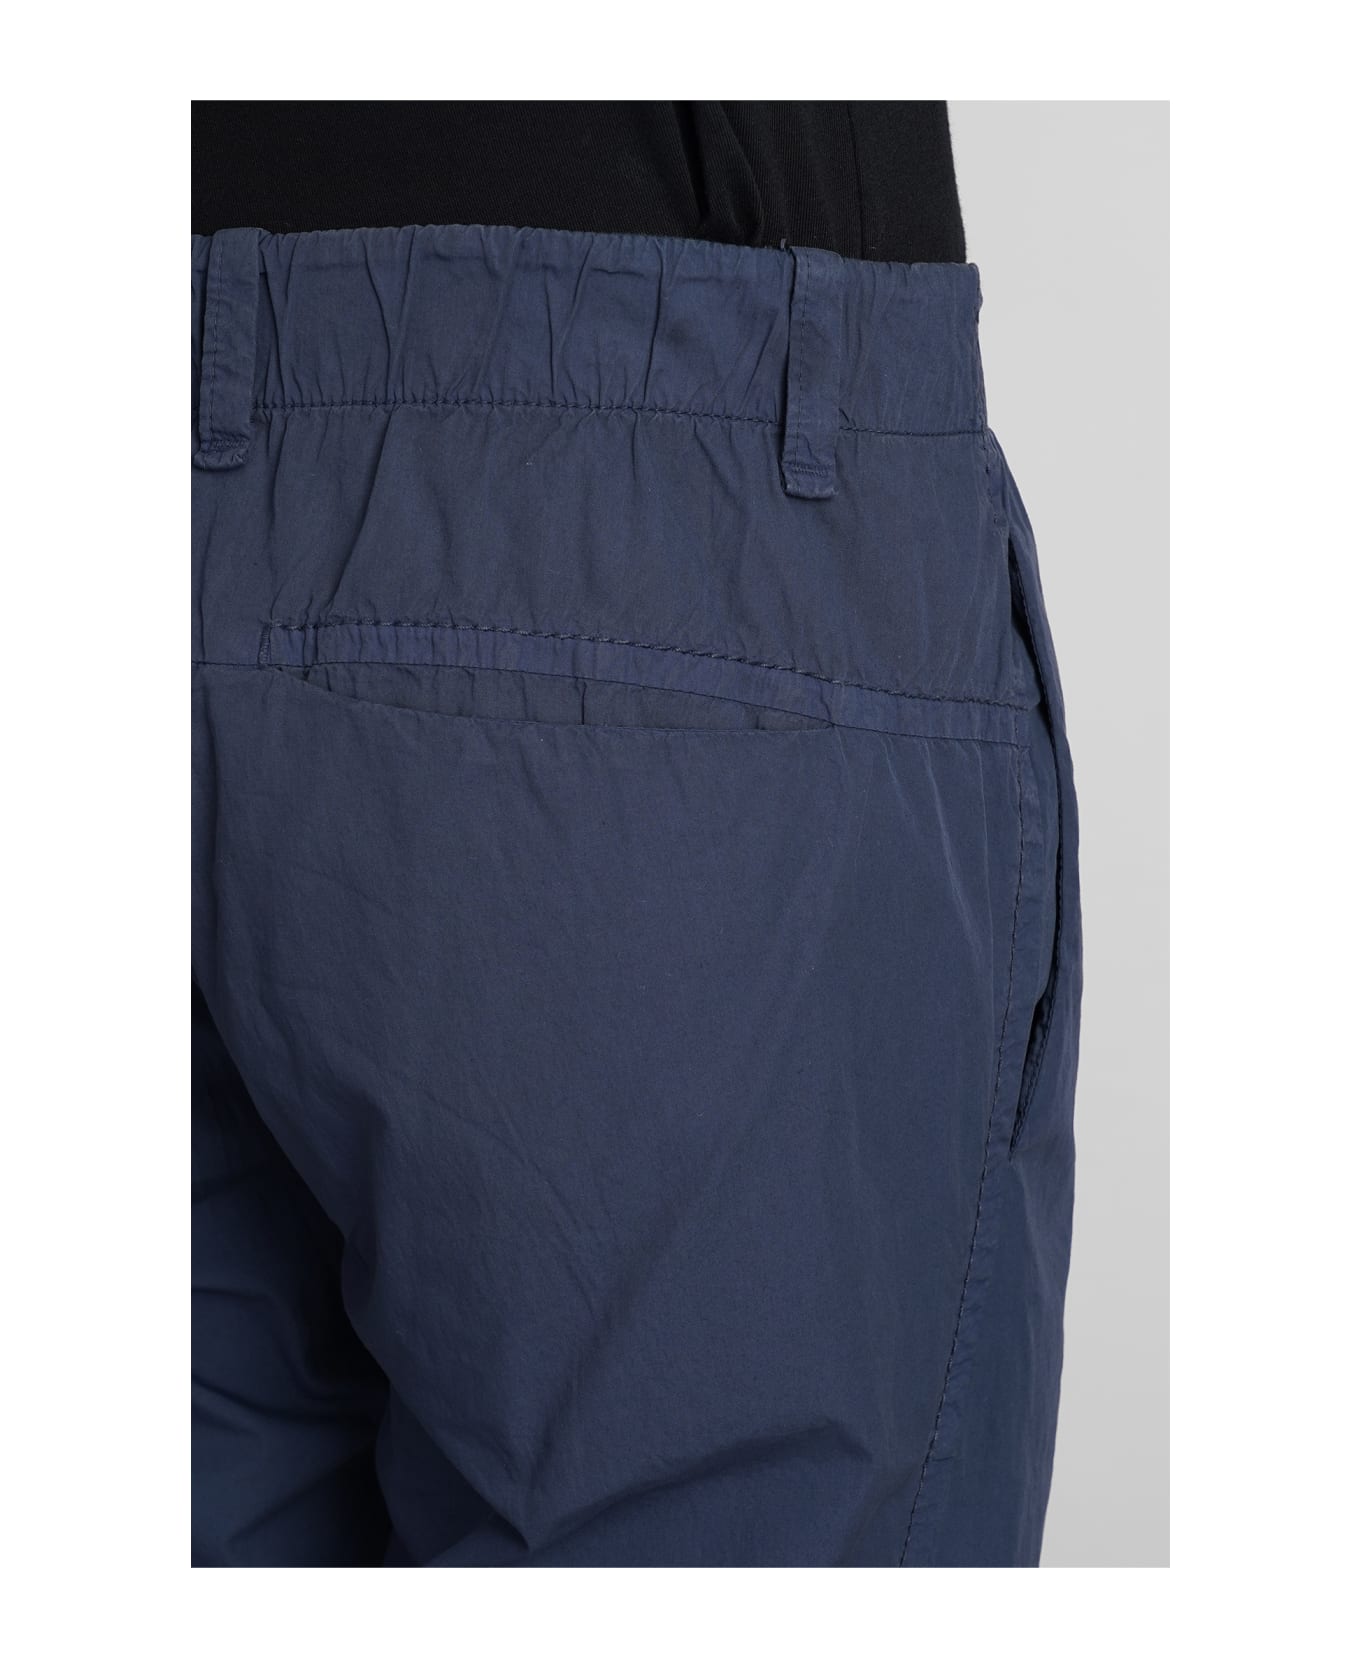 Transit Pants In Blue Cotton - blue